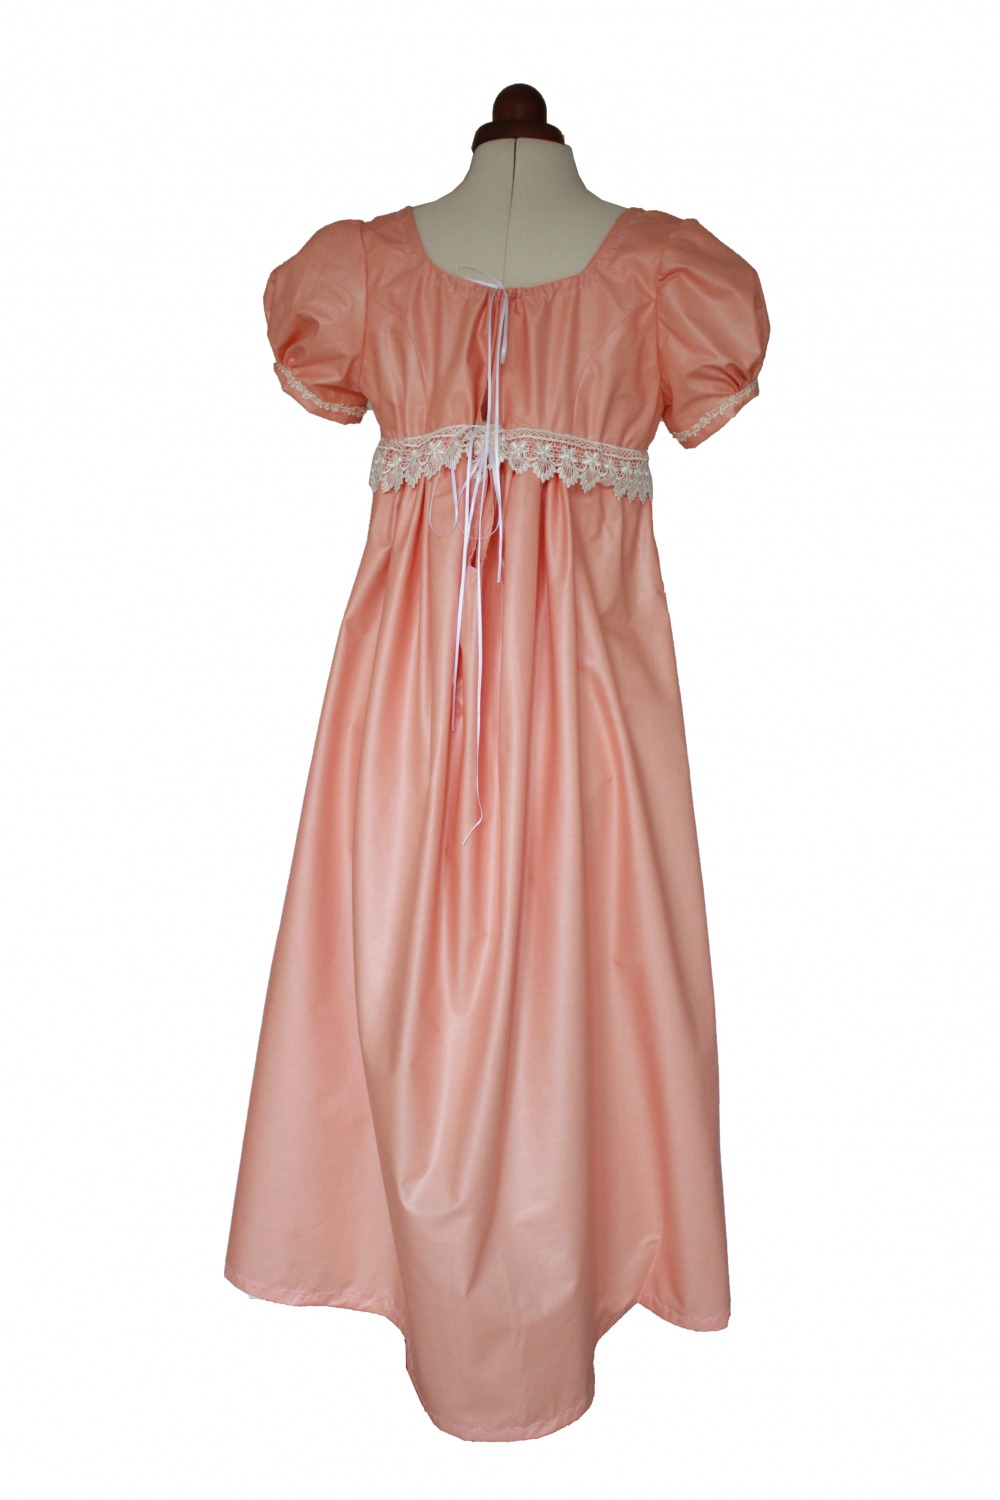 Ladies Petite 18th 19th Regency Jane Austen Day Costume Size 12 - 14 Image